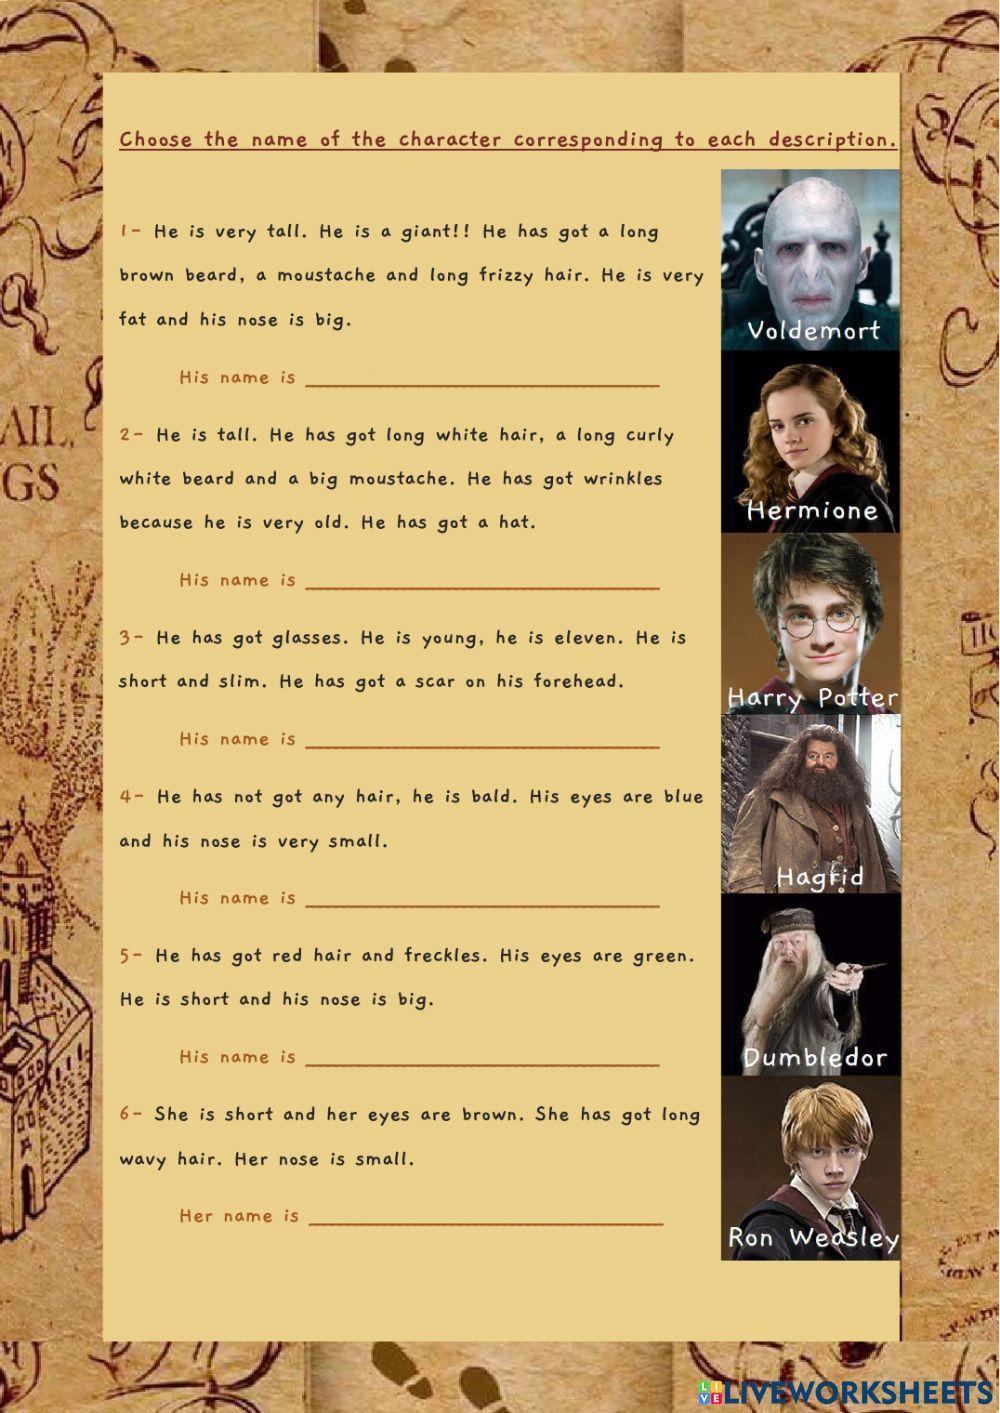 Harry Potter - Characters descriptions